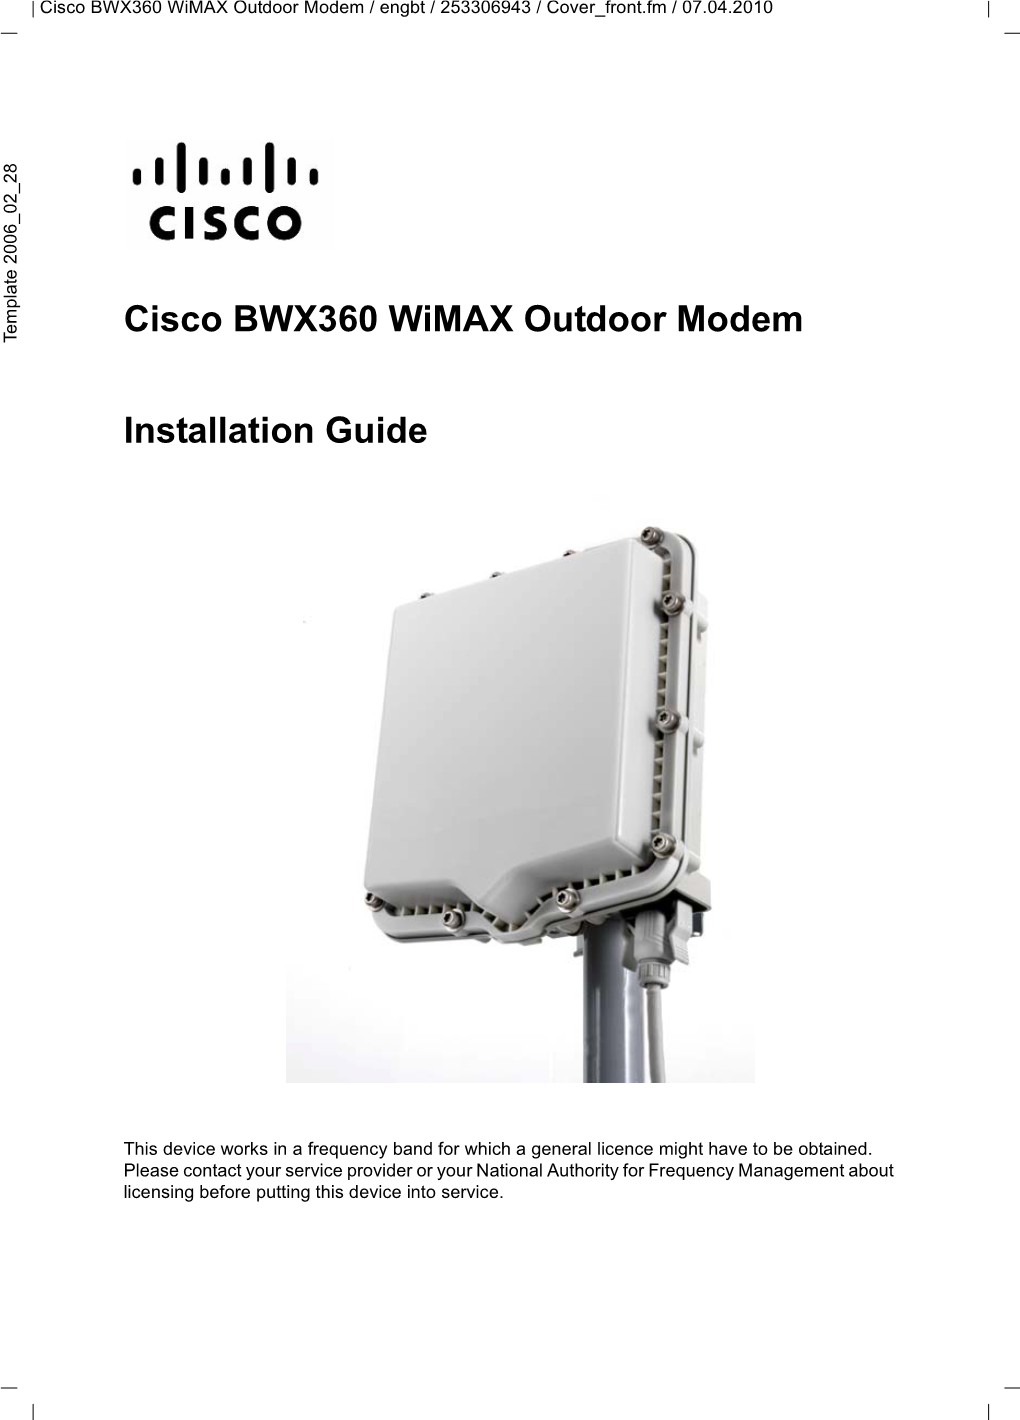 Cisco BWX360 Wimax Outdoor Modem Installation Guide